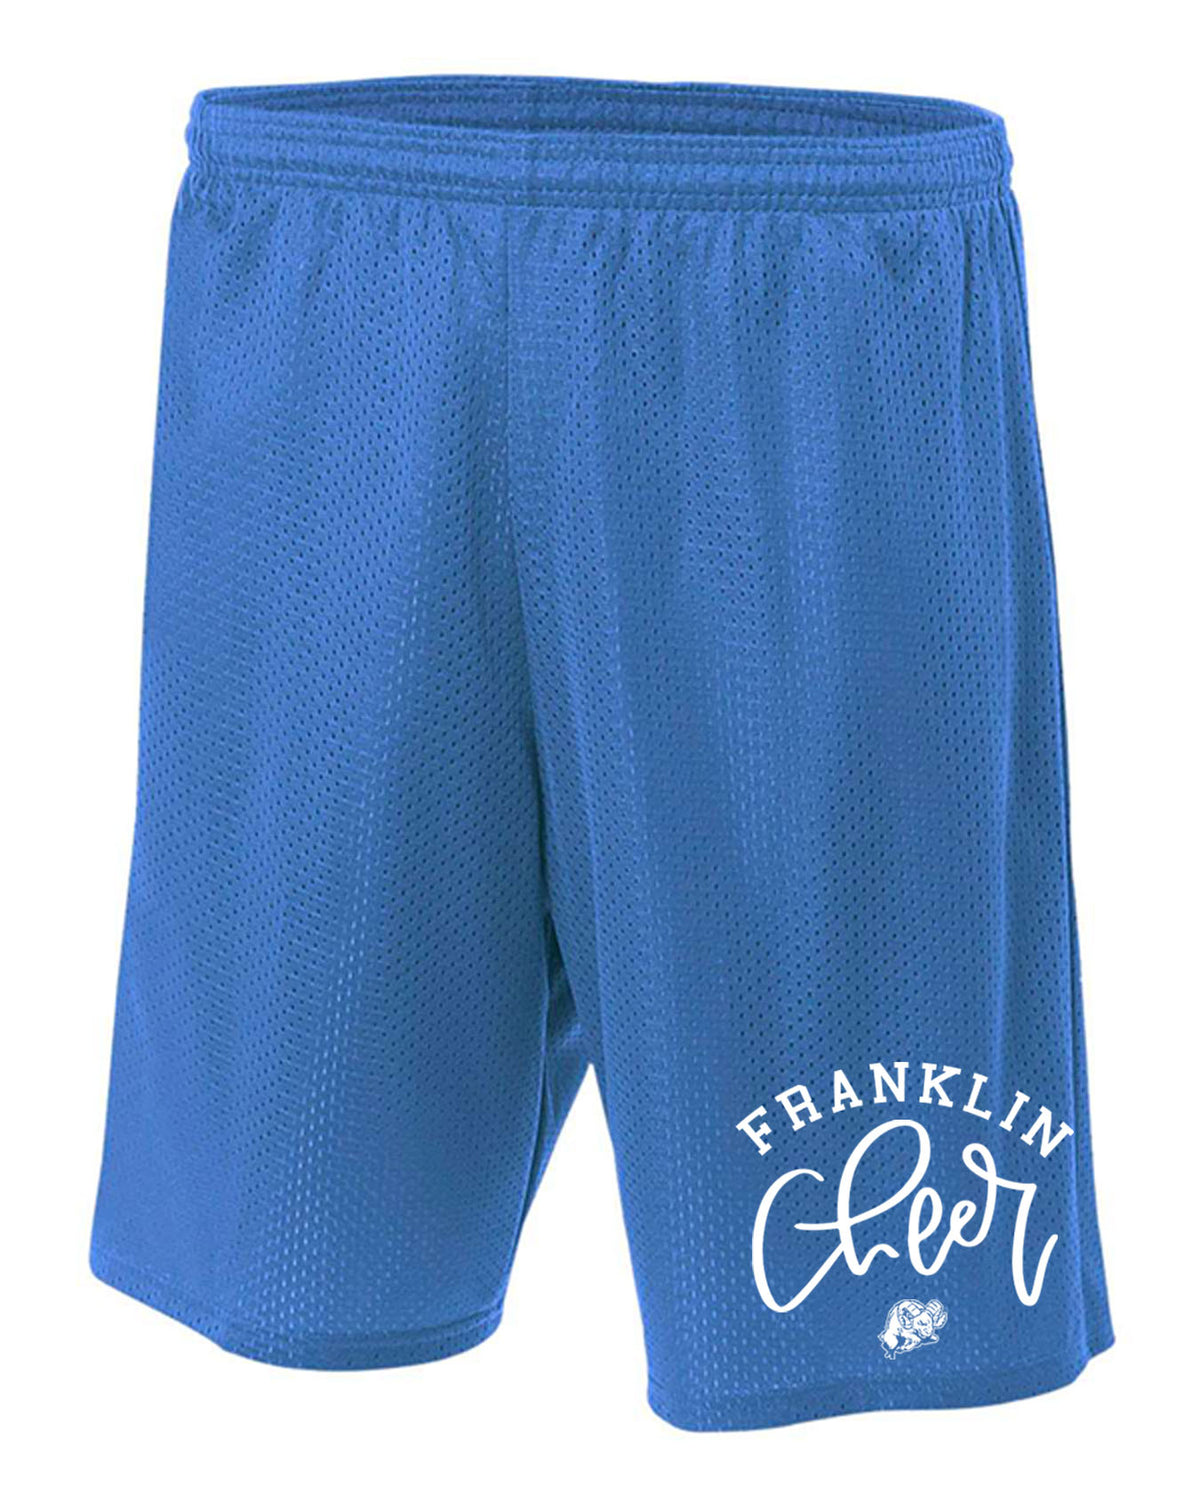 Franklin Cheer Design 3 Mesh Shorts